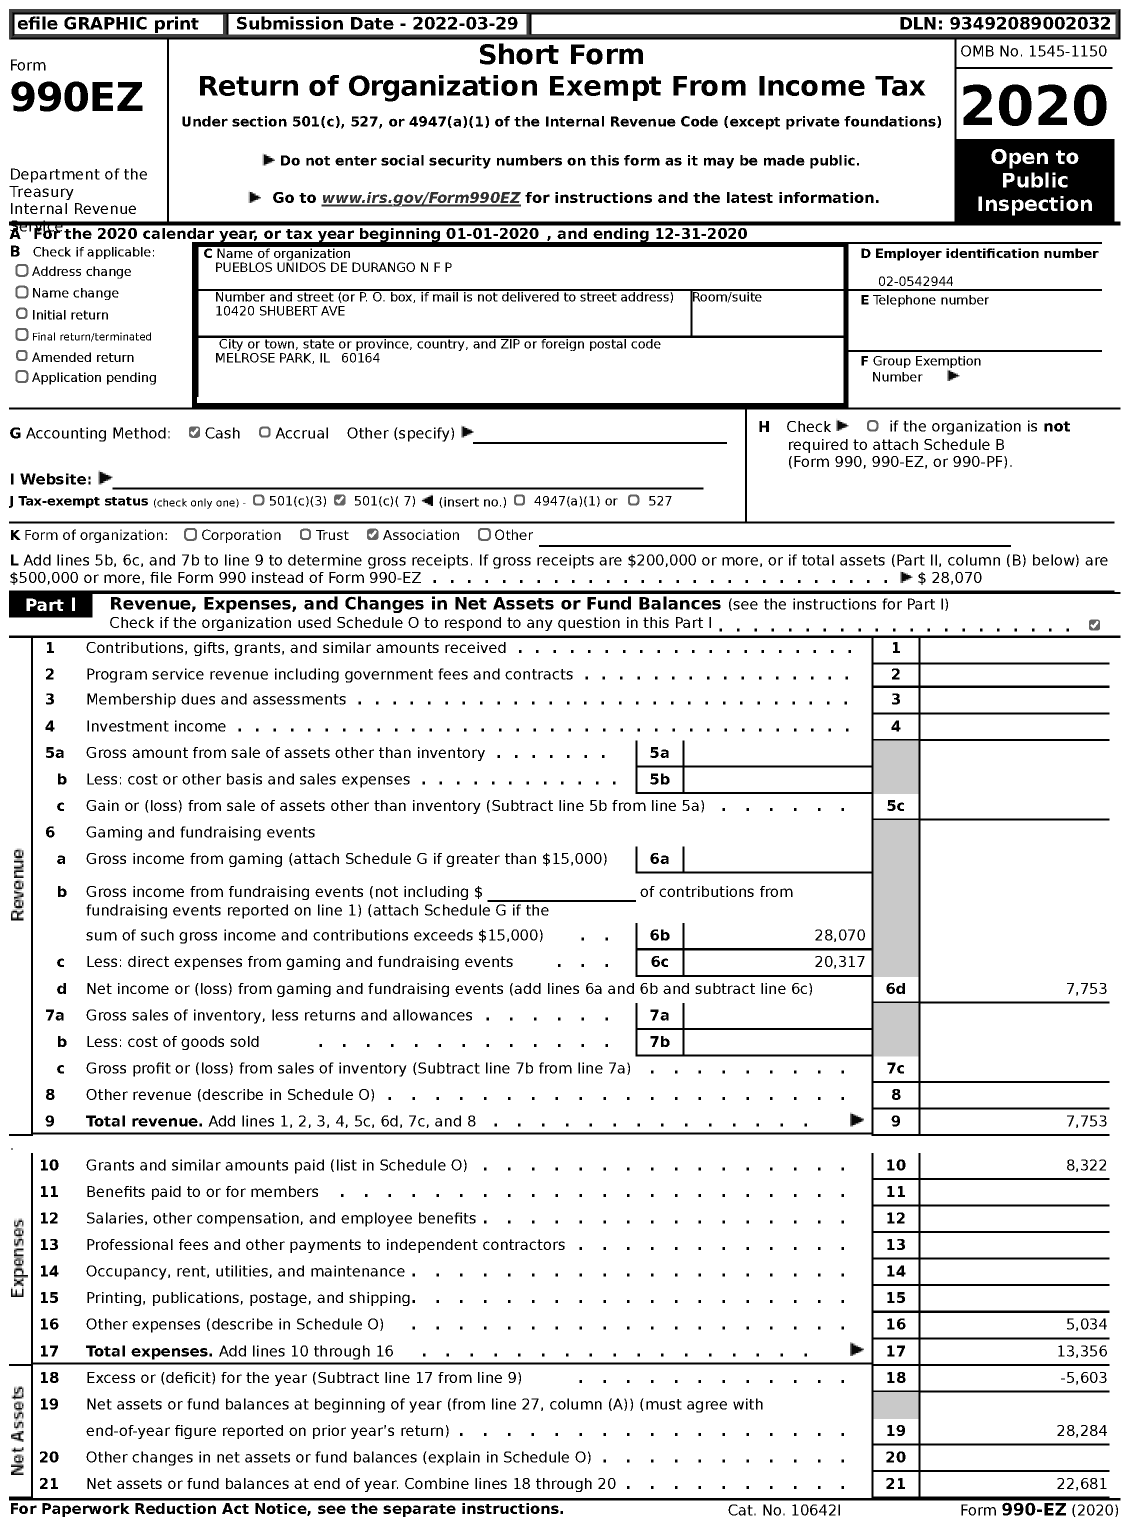 Image of first page of 2020 Form 990EZ for Pueblos Unidos de Durango N F P